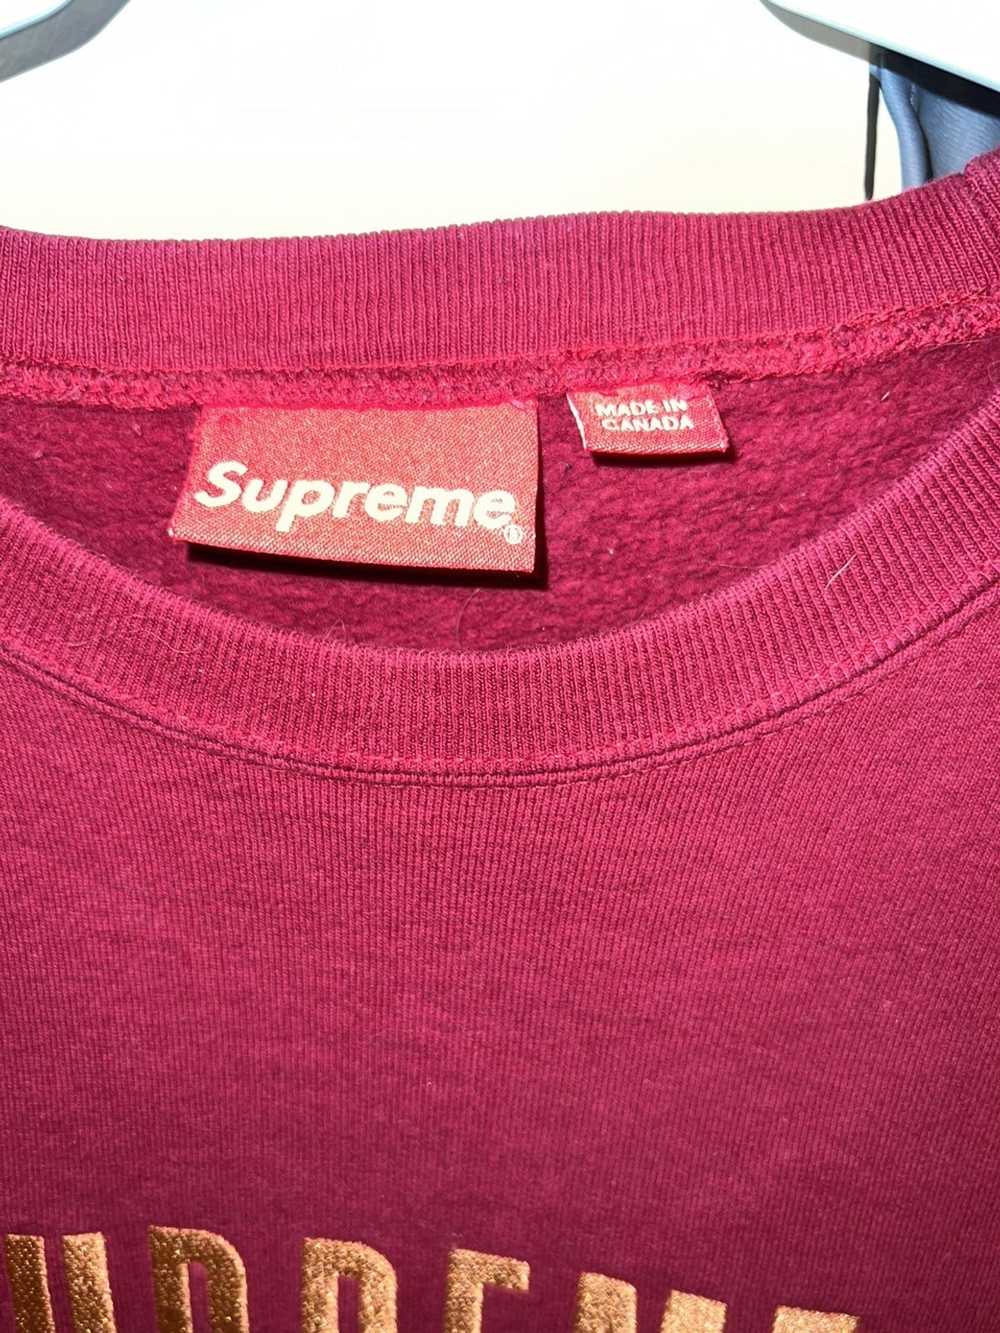 Supreme Supreme 1994 World Famous Logo Sweater - image 3